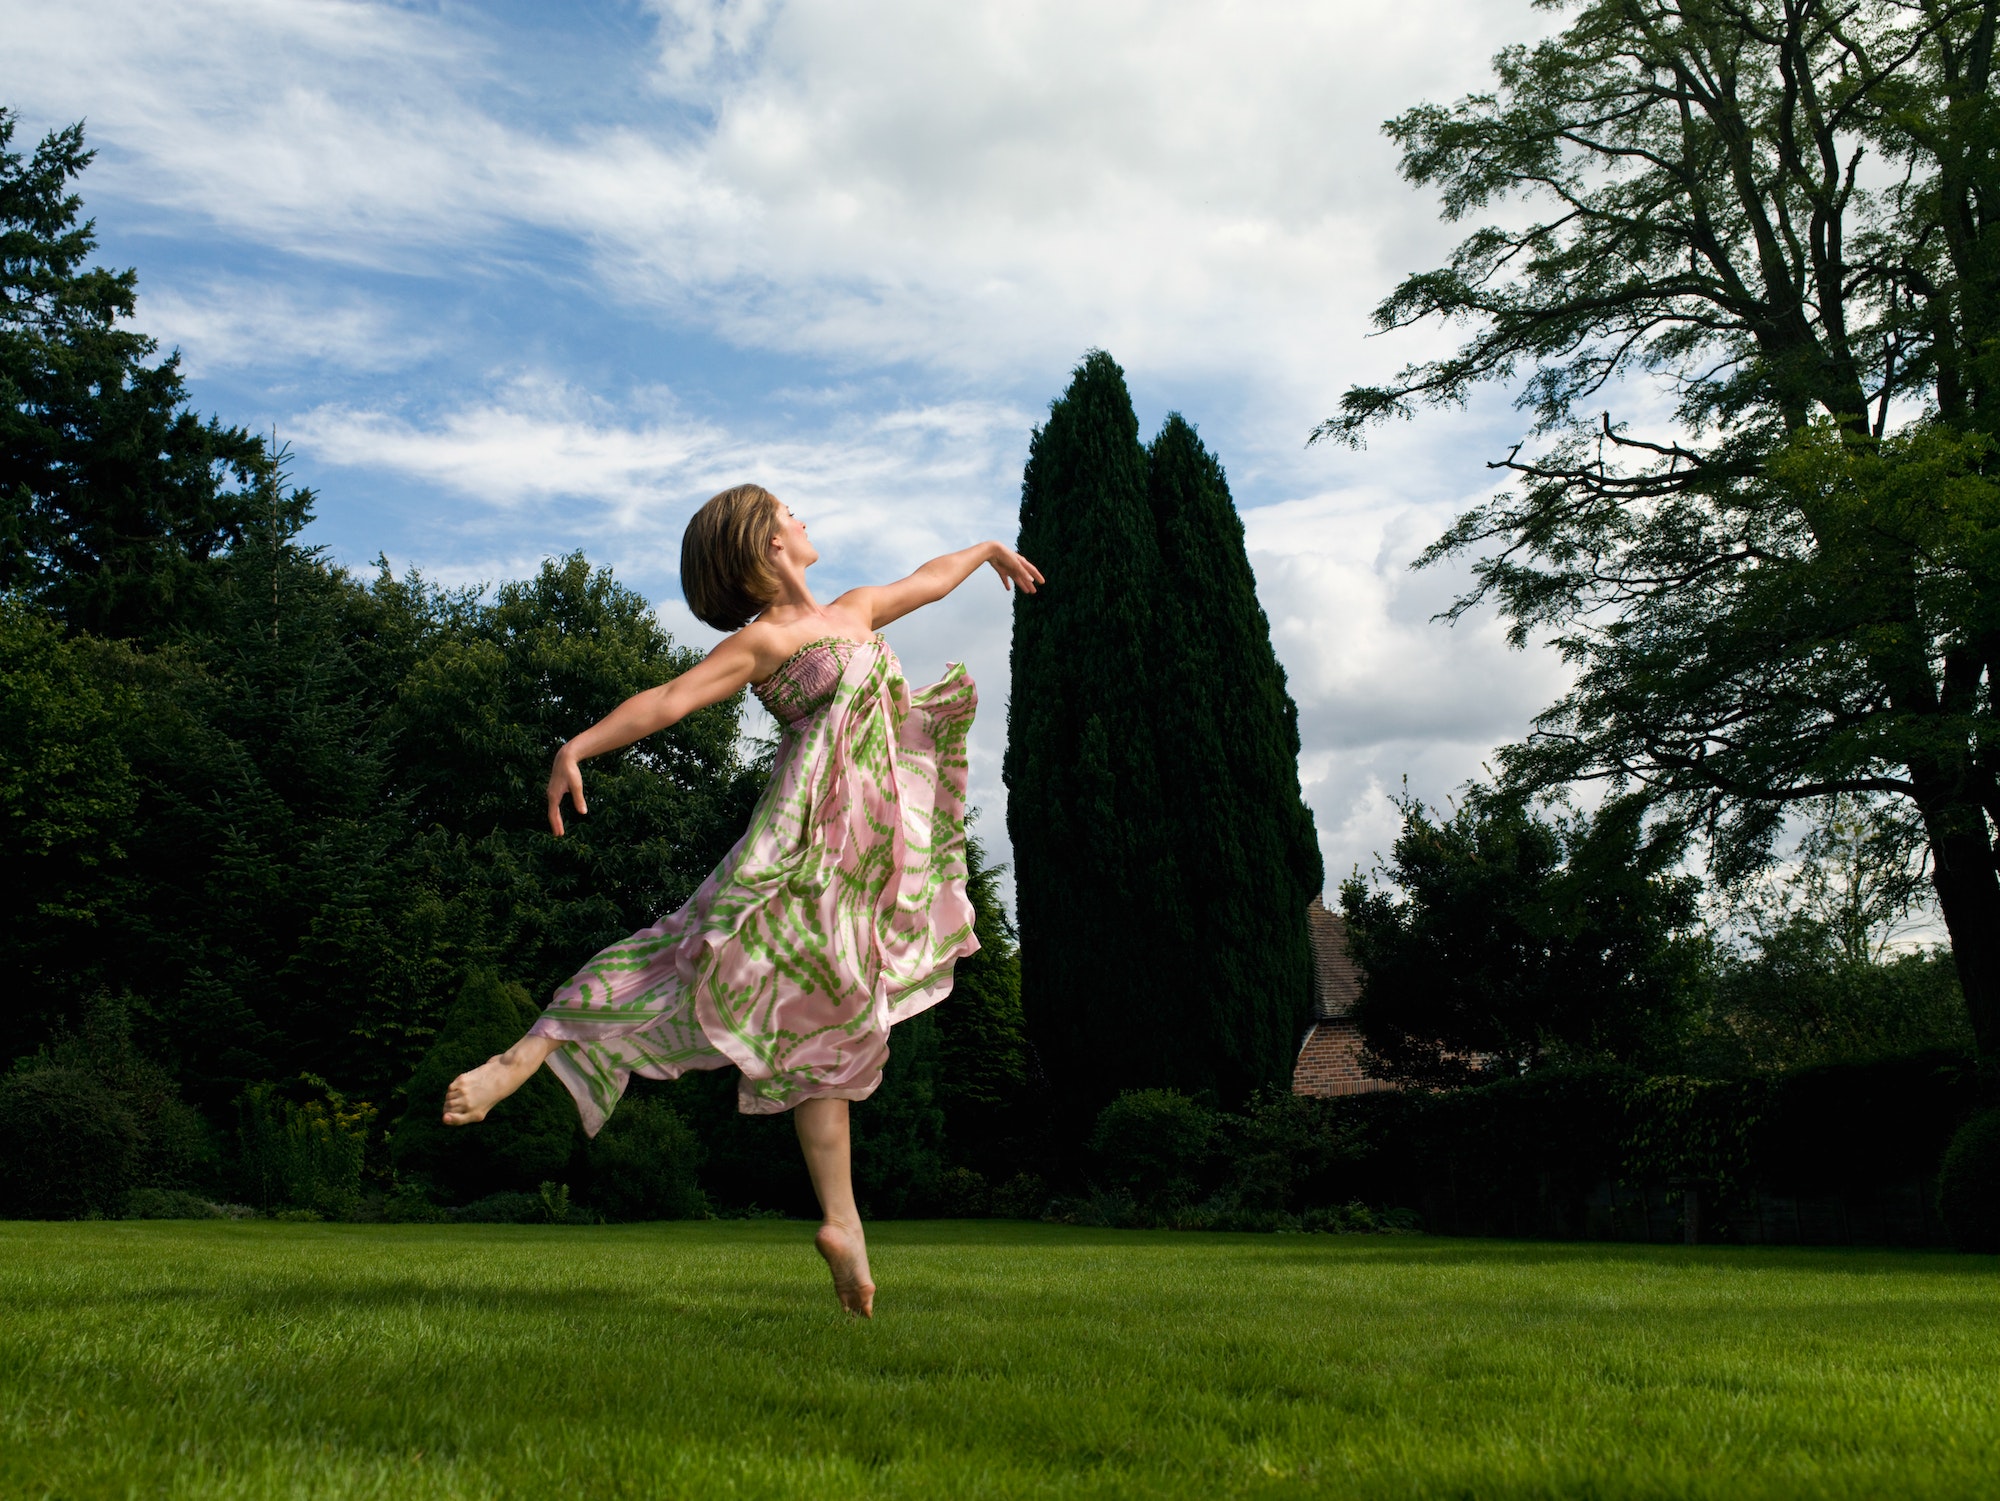 A young woman dancing in a garden